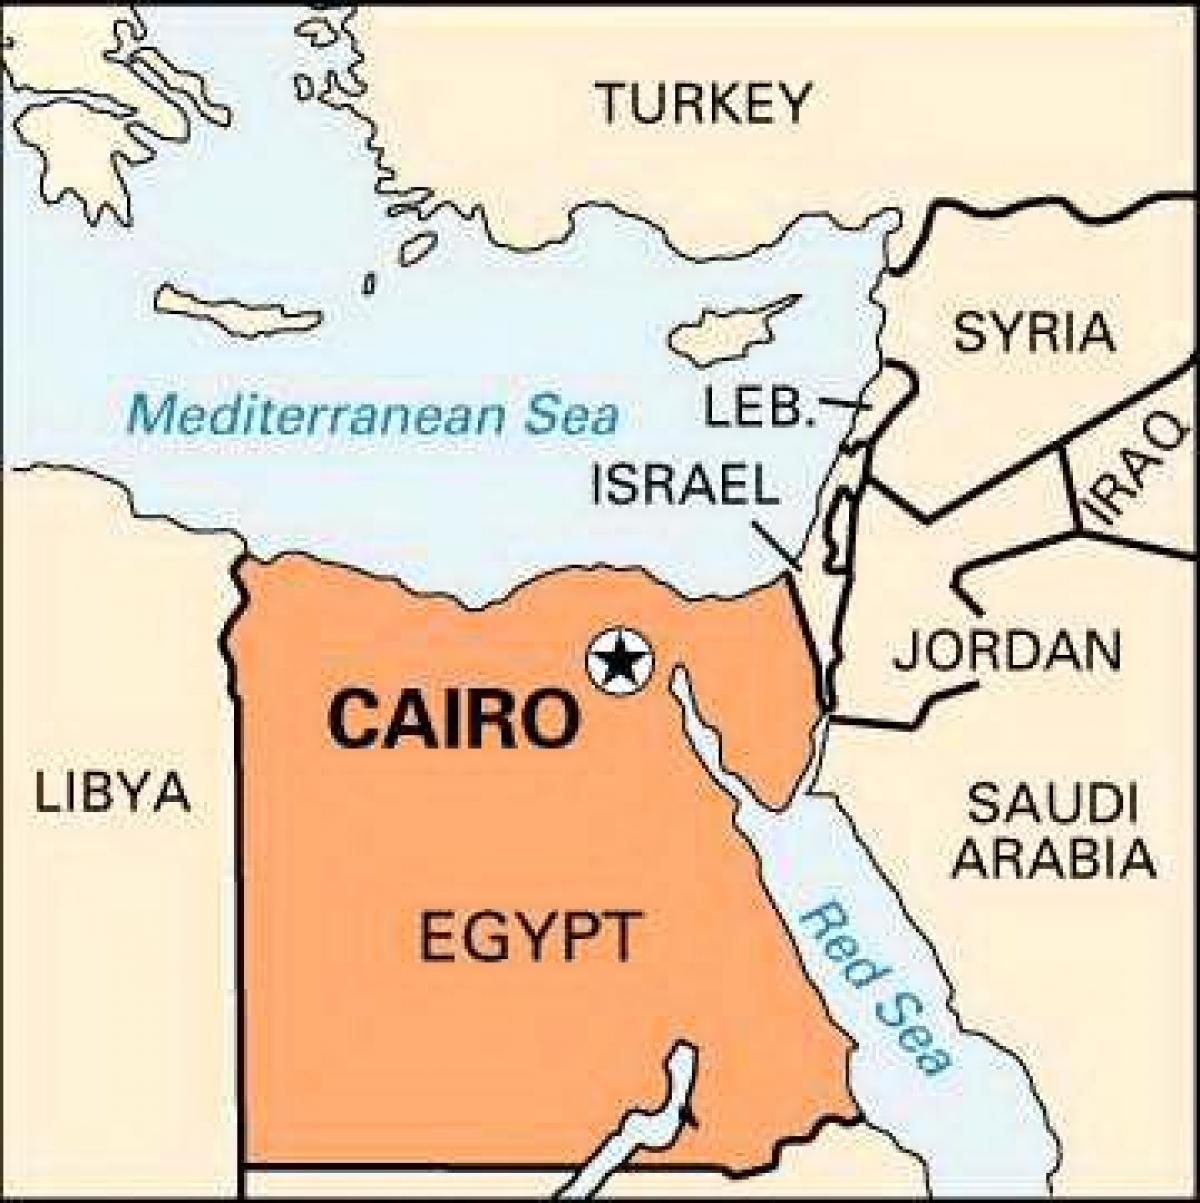 Kahire harita konumu